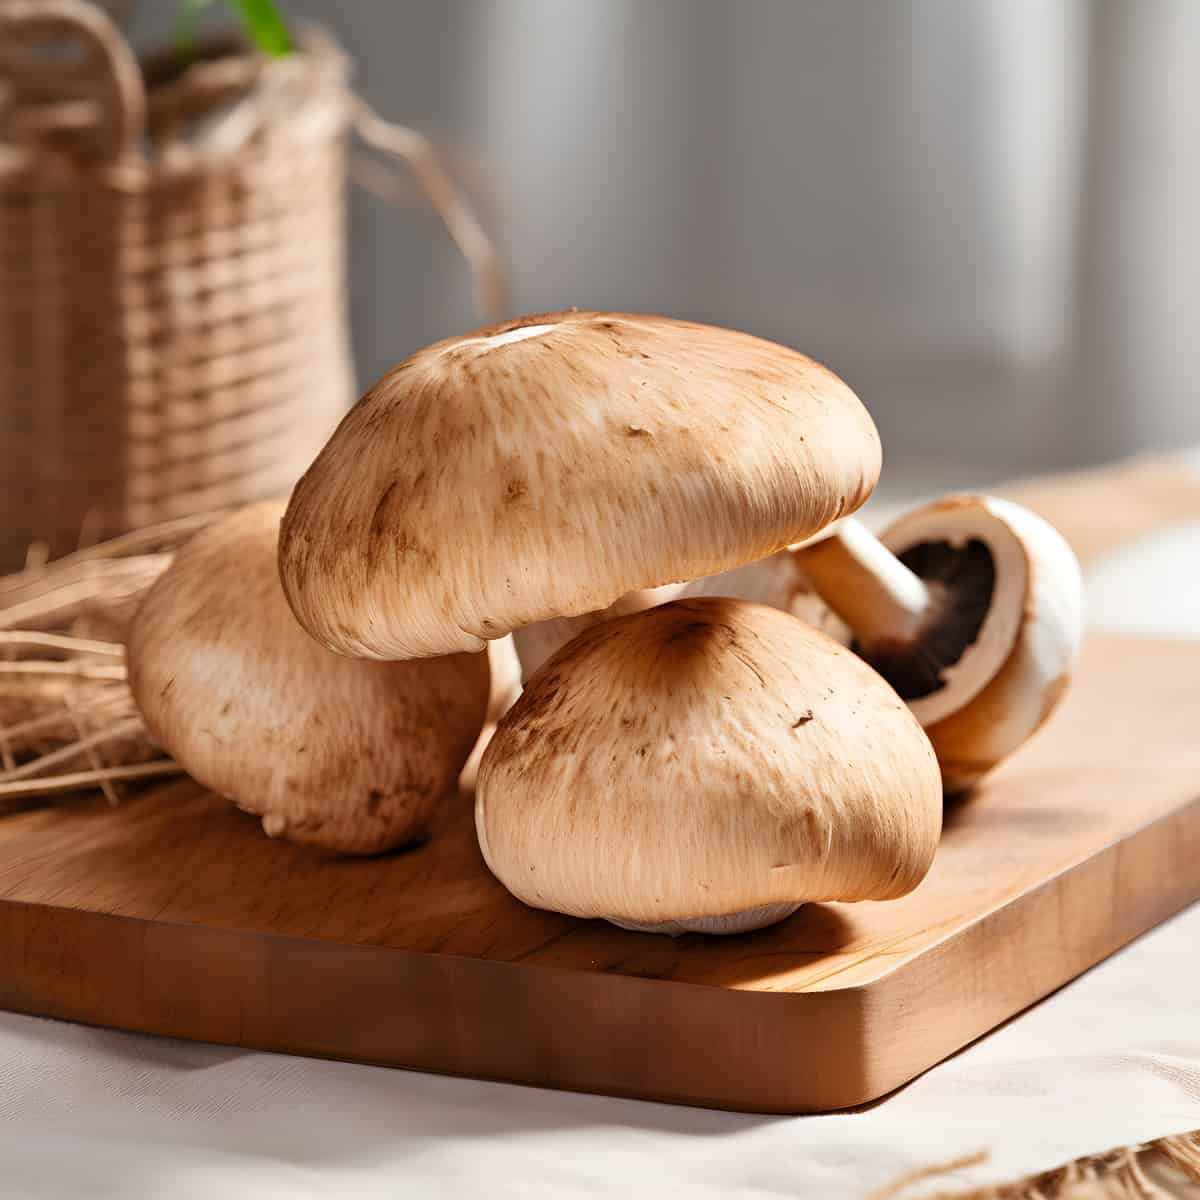 Cremini Mushrooms on a kitchen counter